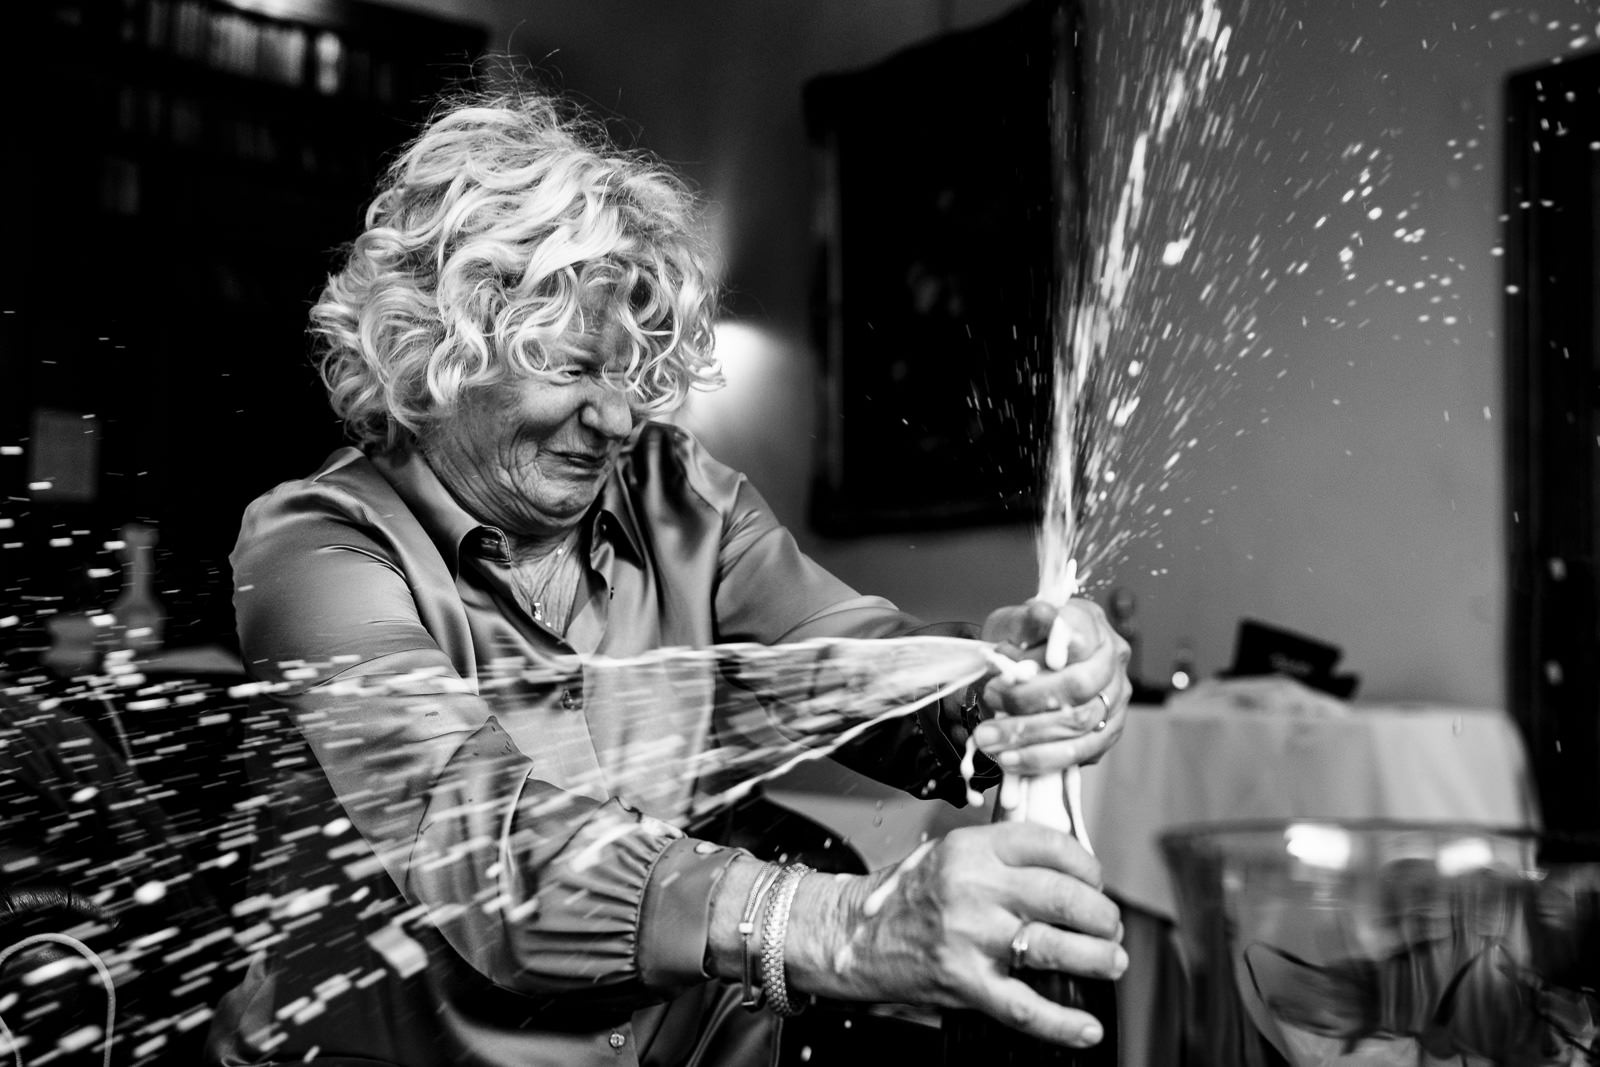 Trouwfotograaf Den Haag Champagne fles knalt open